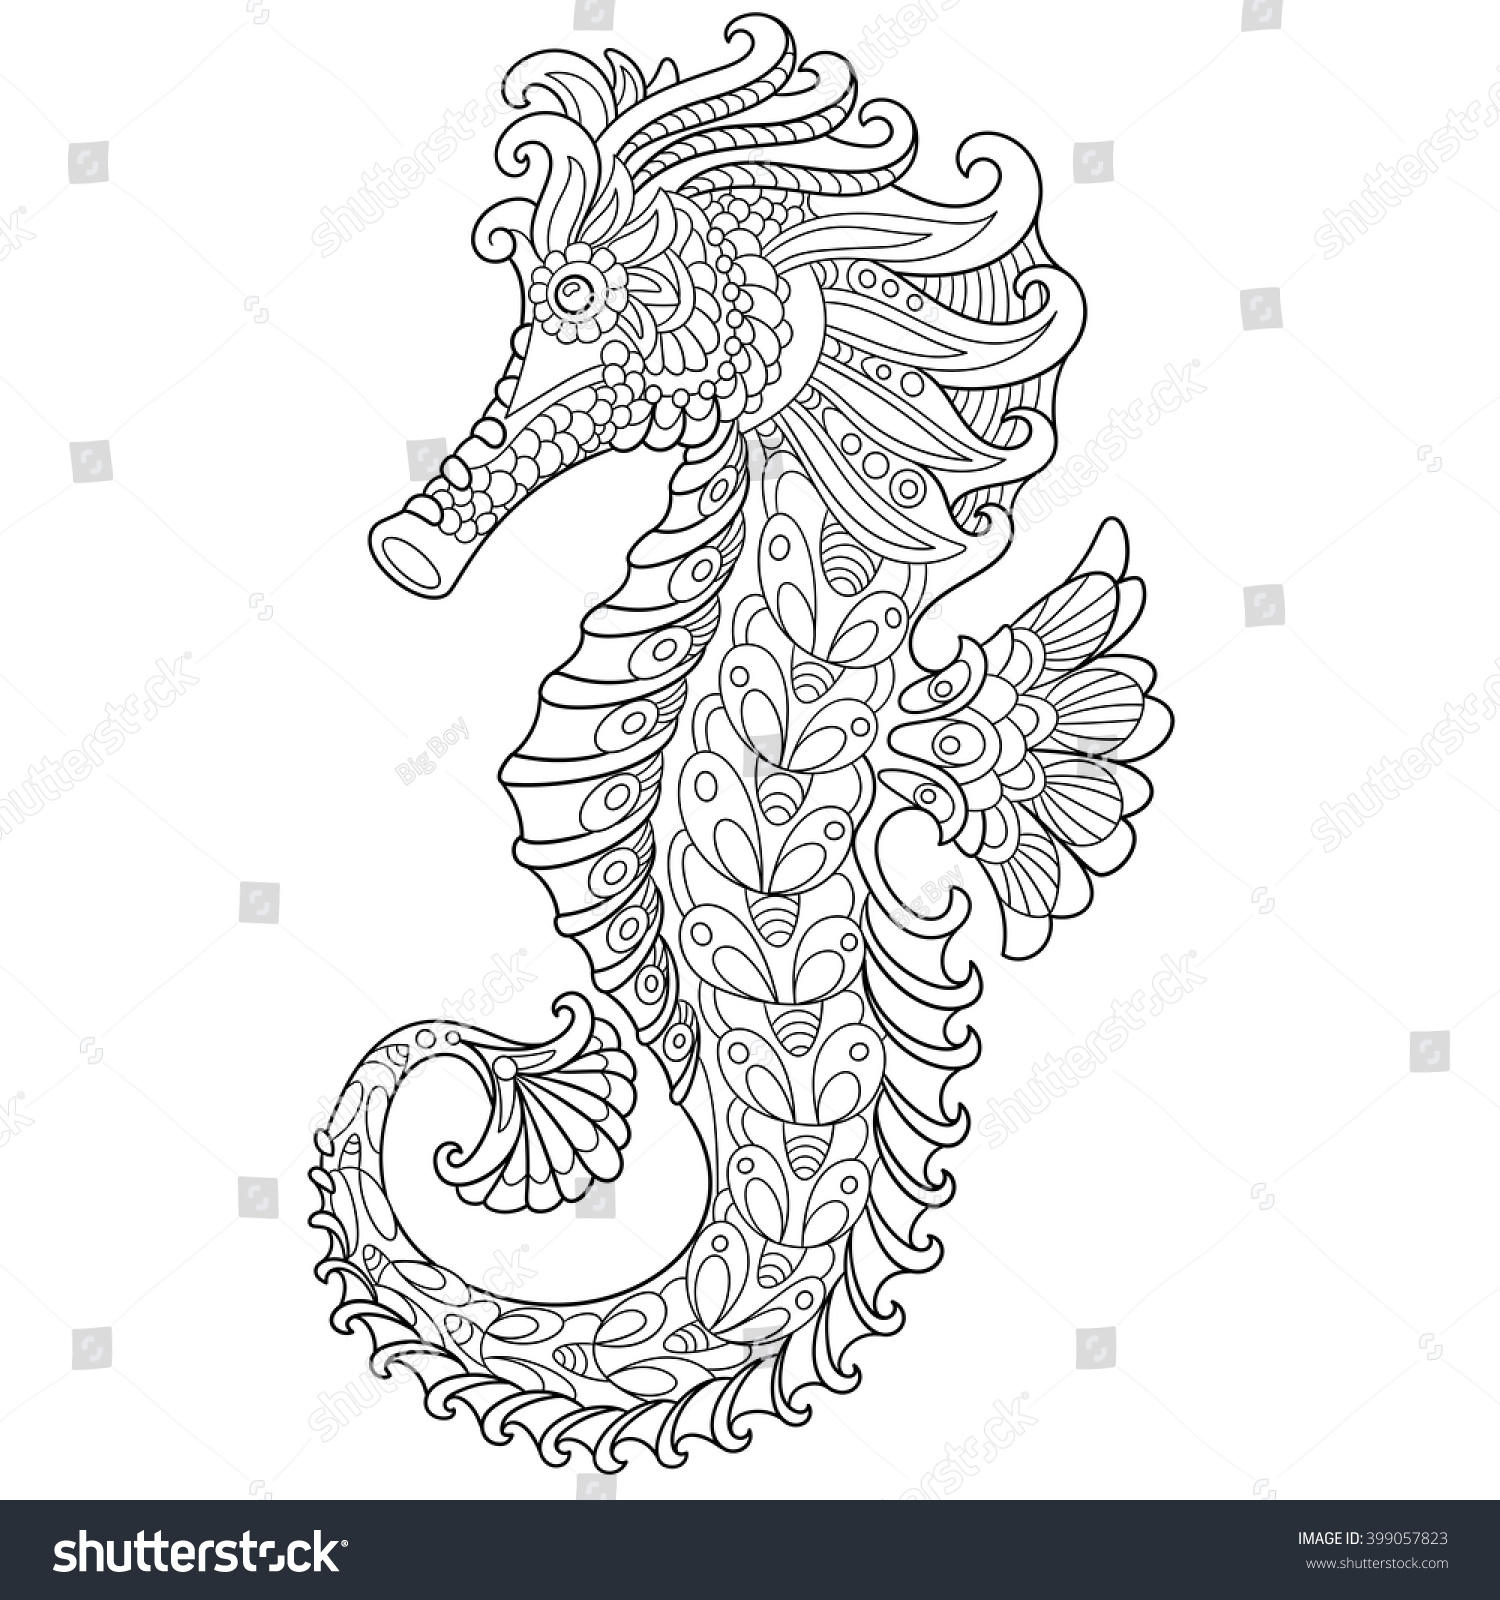 Zentangle Stylized Cartoon Seahorse Isolated On Stock Vector (Royalty ...